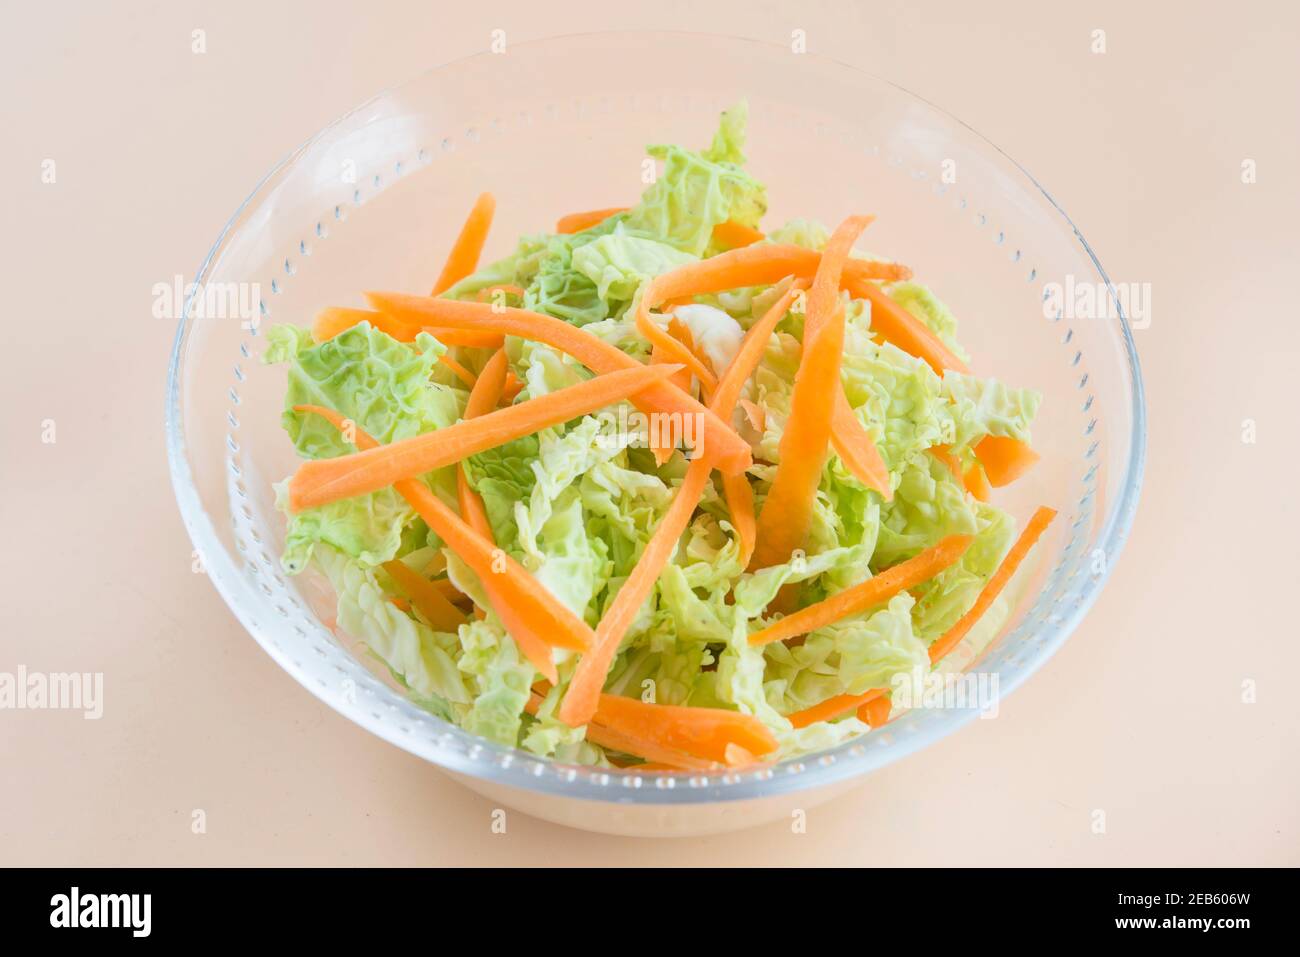 Ensalada de ensalada de col, ensalada de col y zanahoria Foto de stock